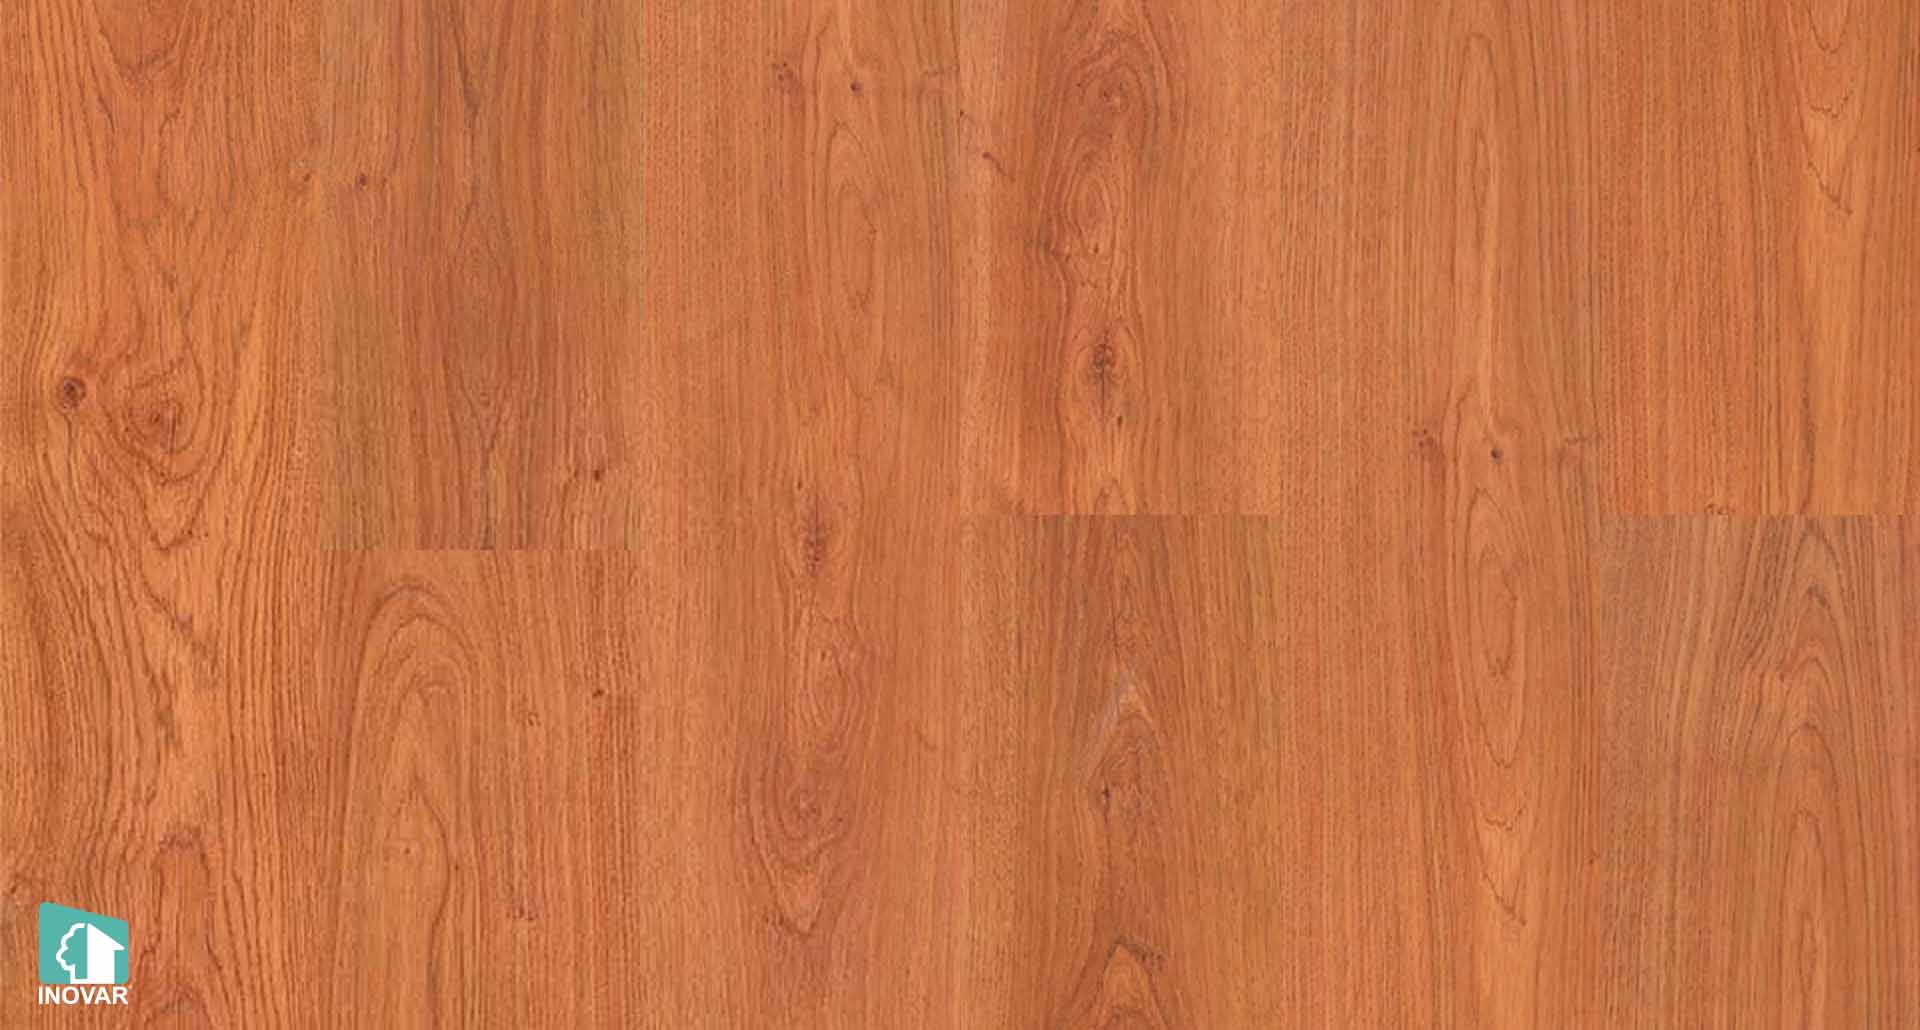 Planked Oak